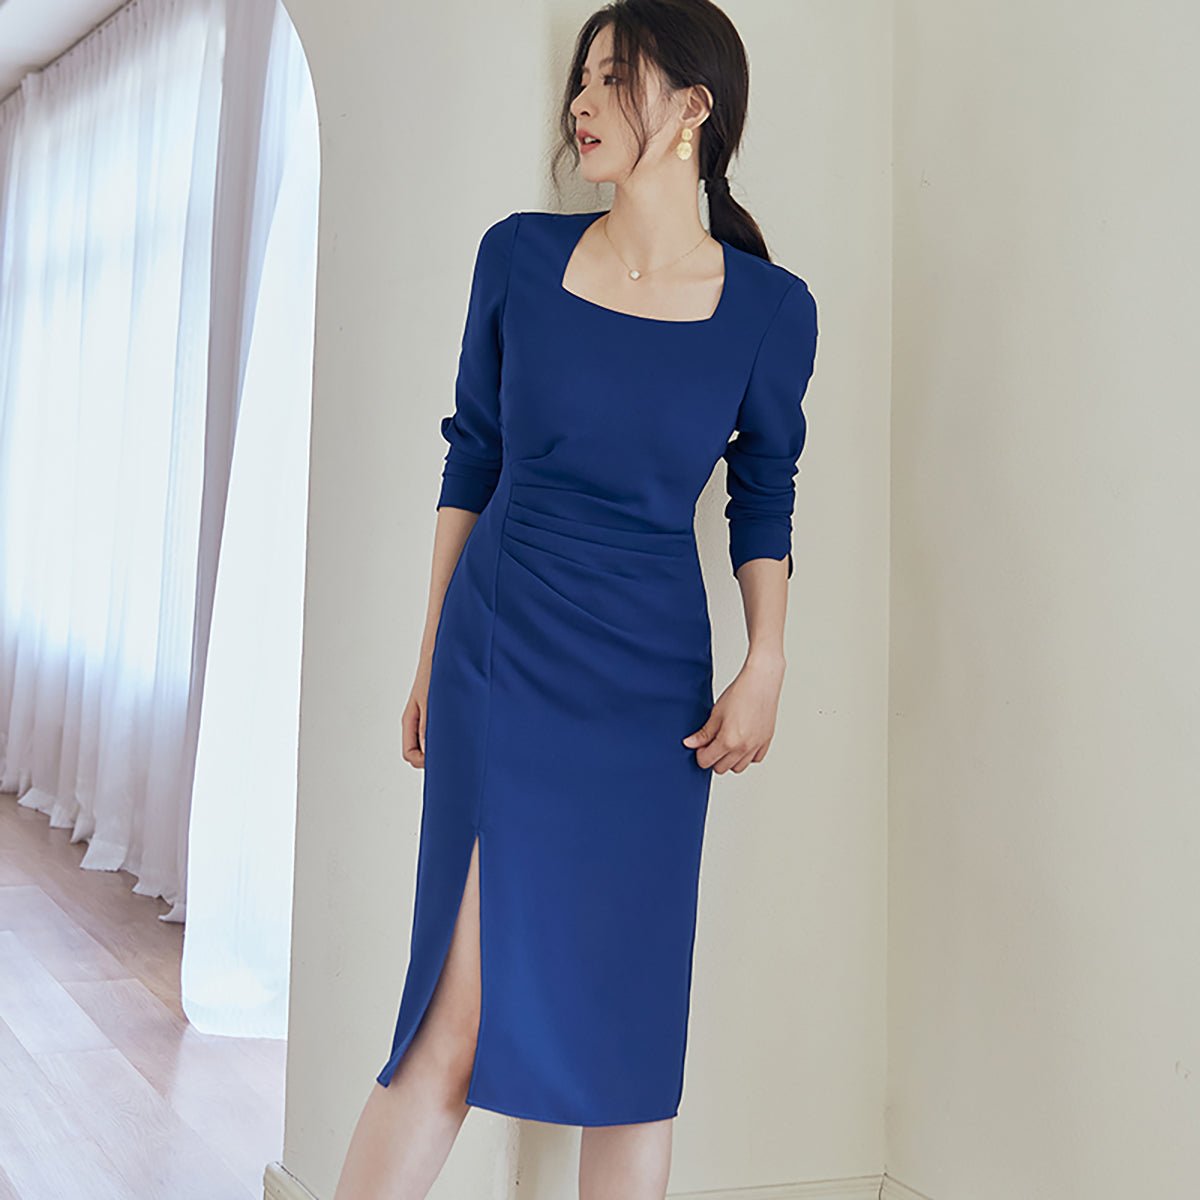 Square Neck Blue Bodycon Dress - 0cm